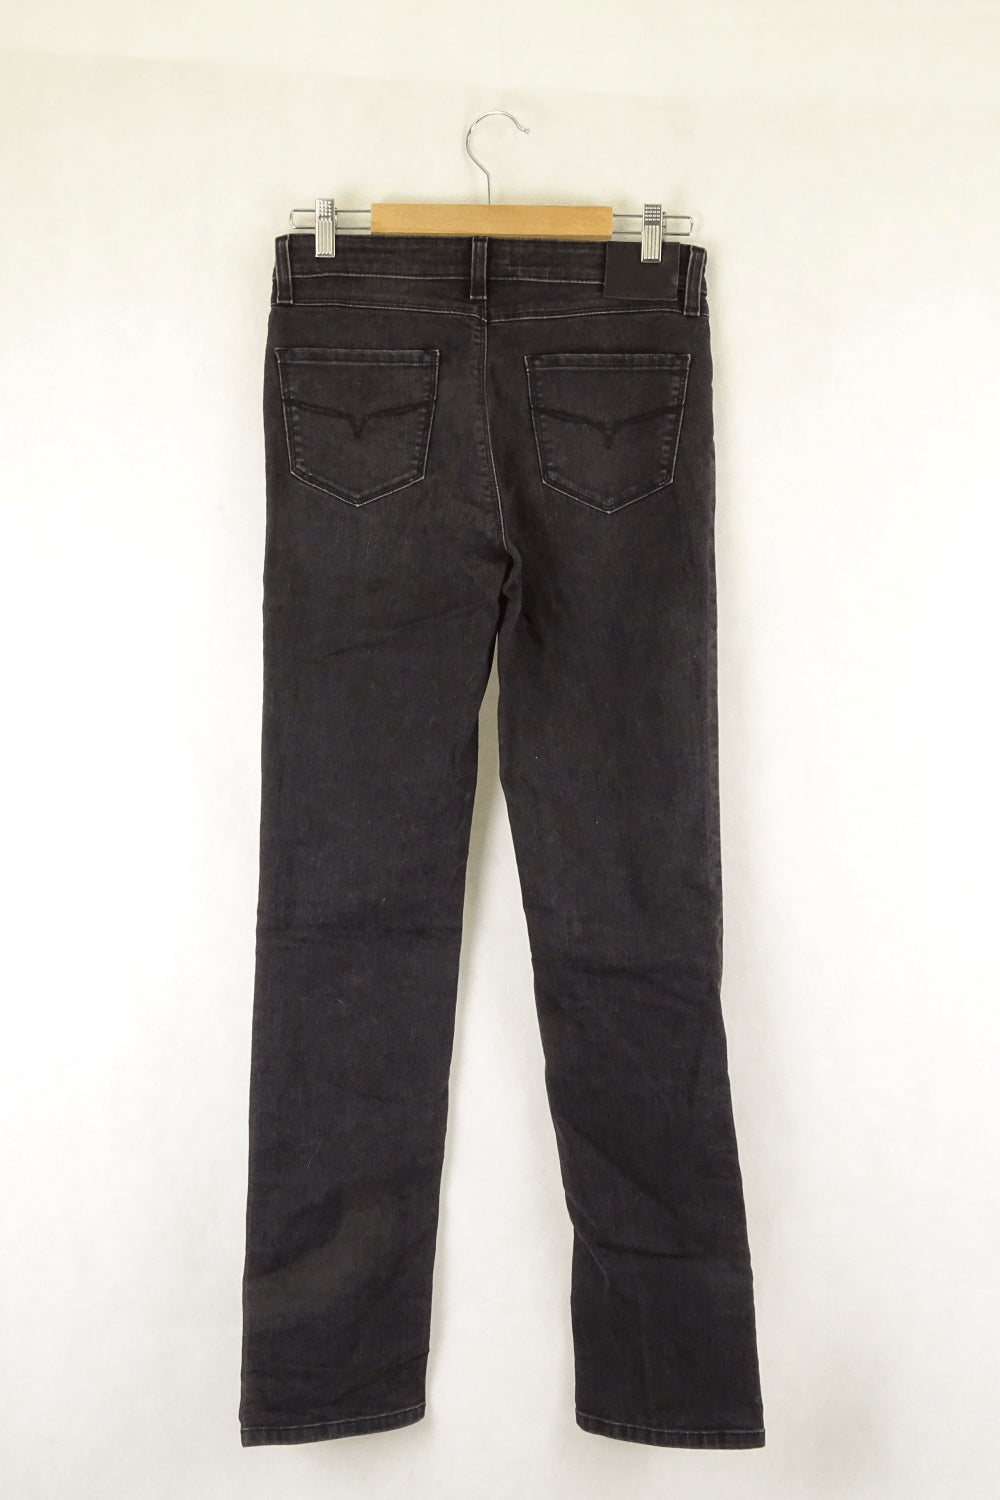 R.M Williams Grey Jeans 8